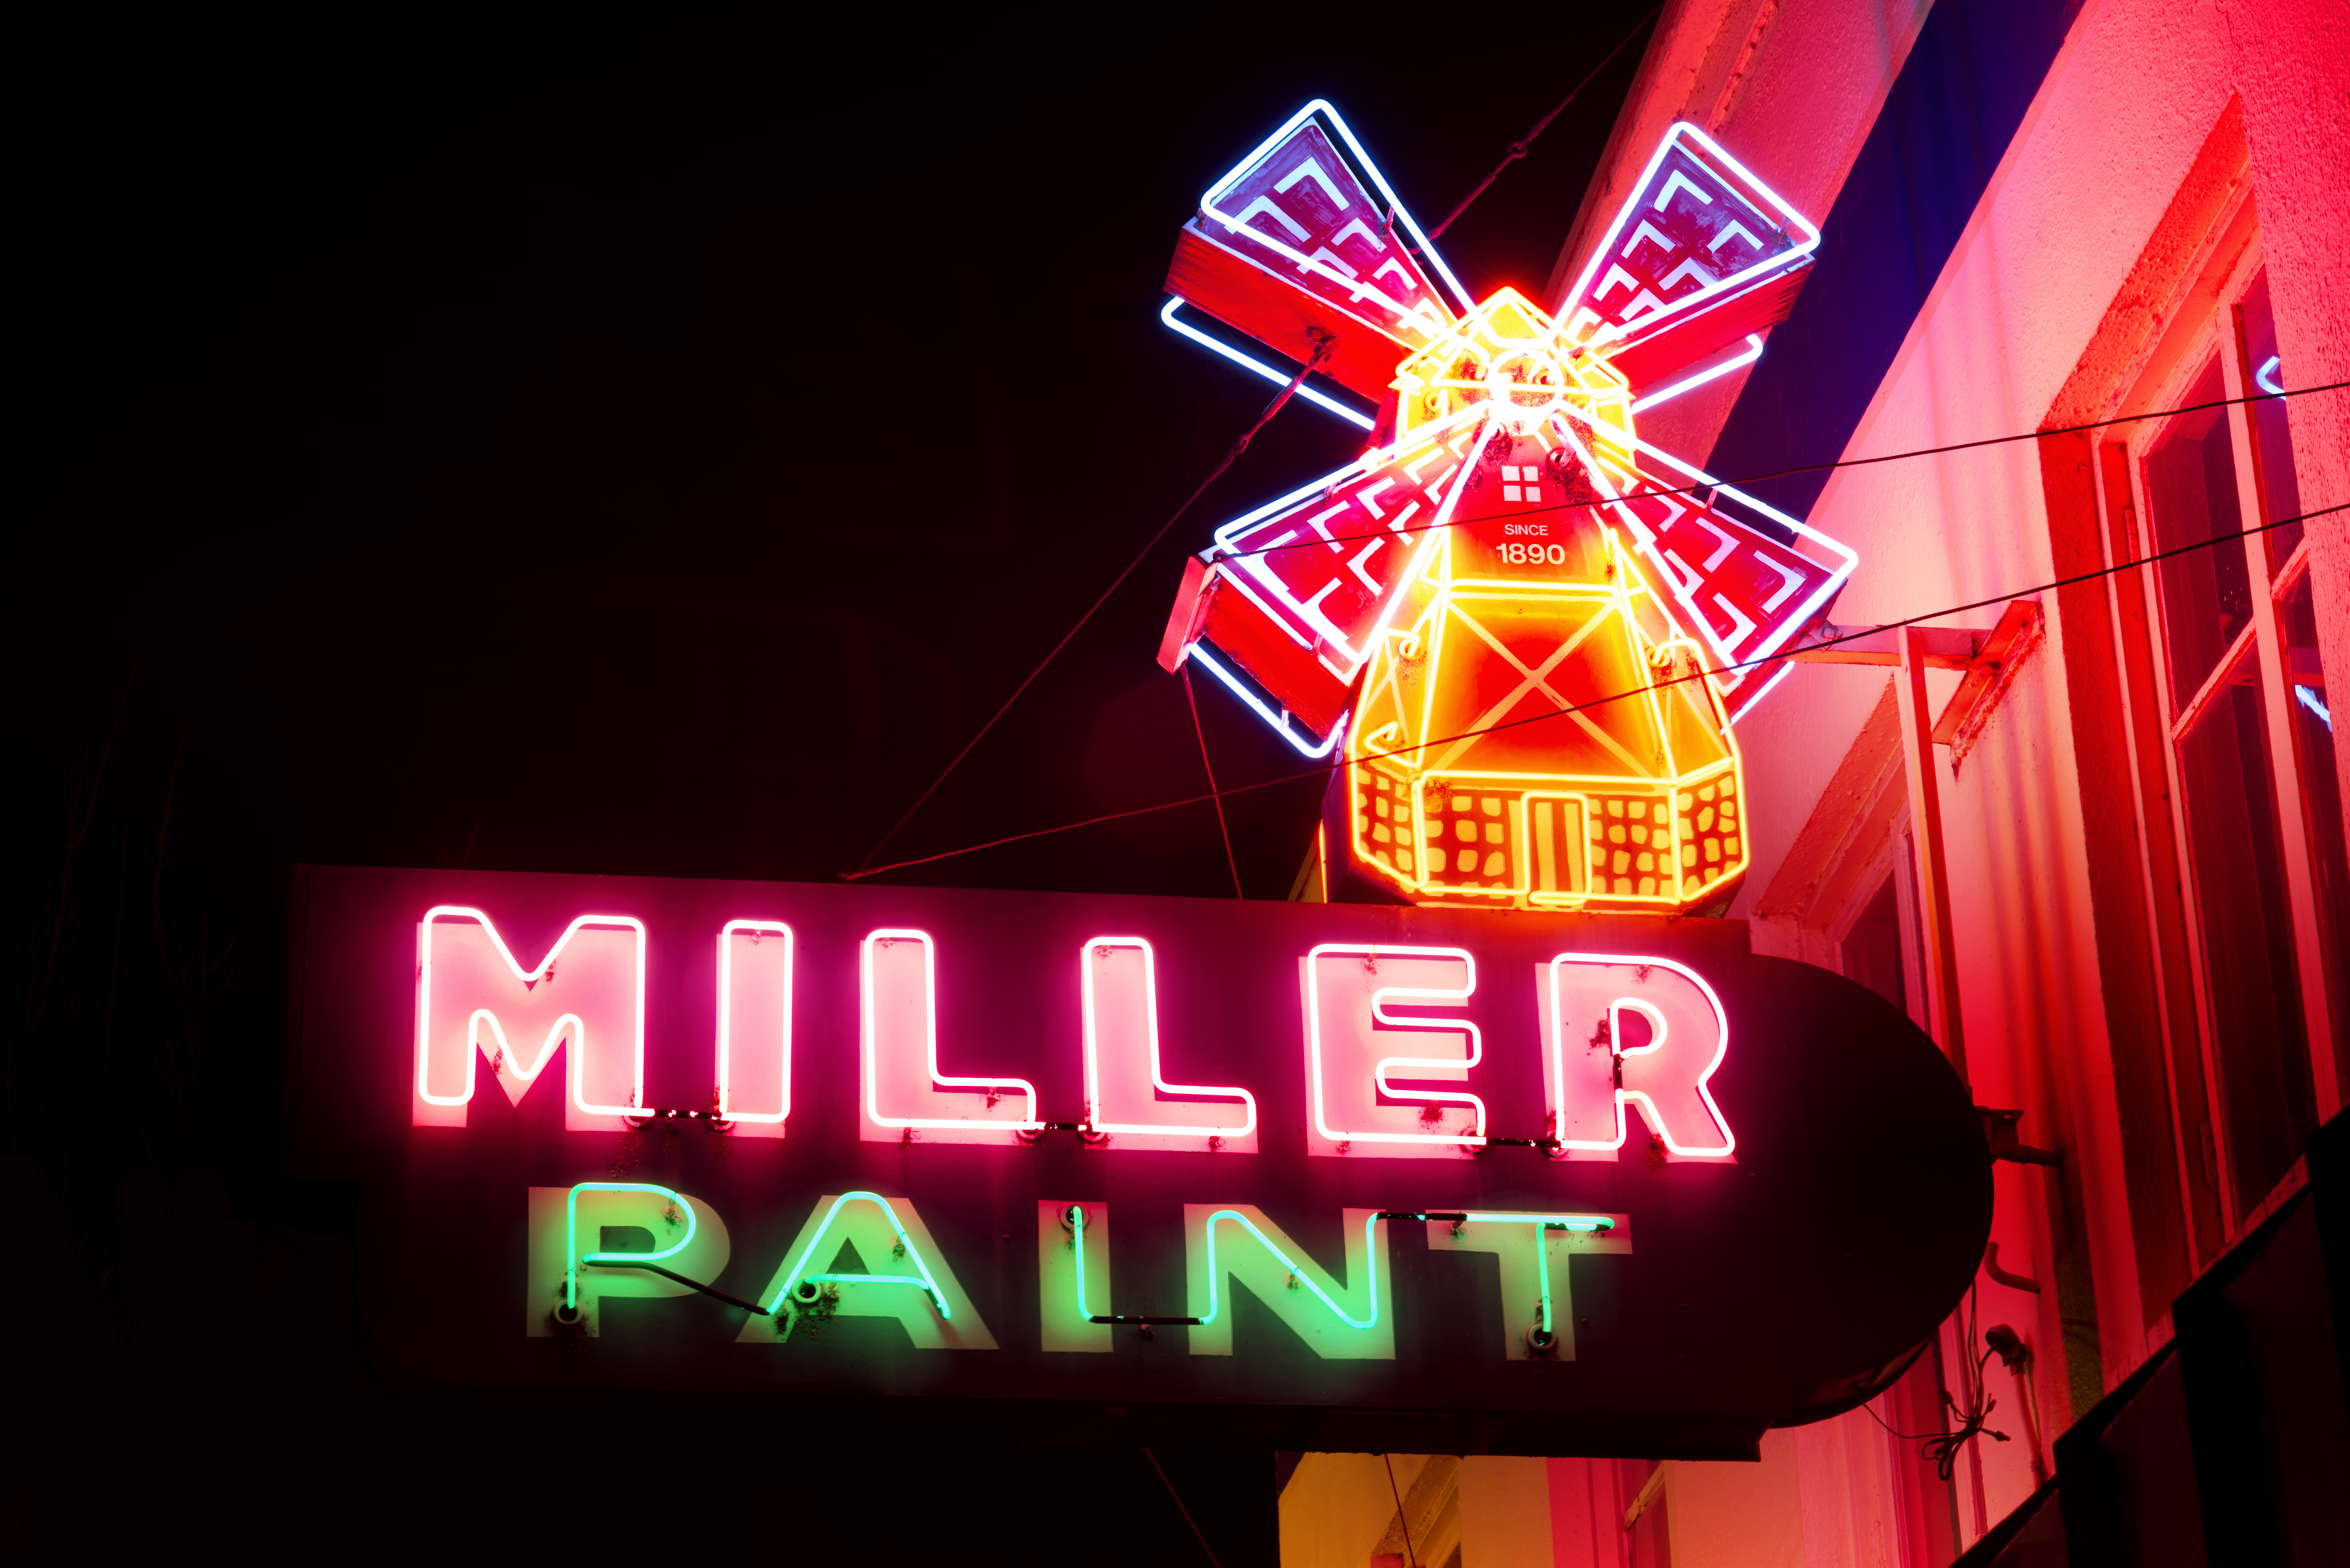 Miller Paint - 317 SE Grand Avenue, Portland, Oregon U.S.A. - February 2, 2014